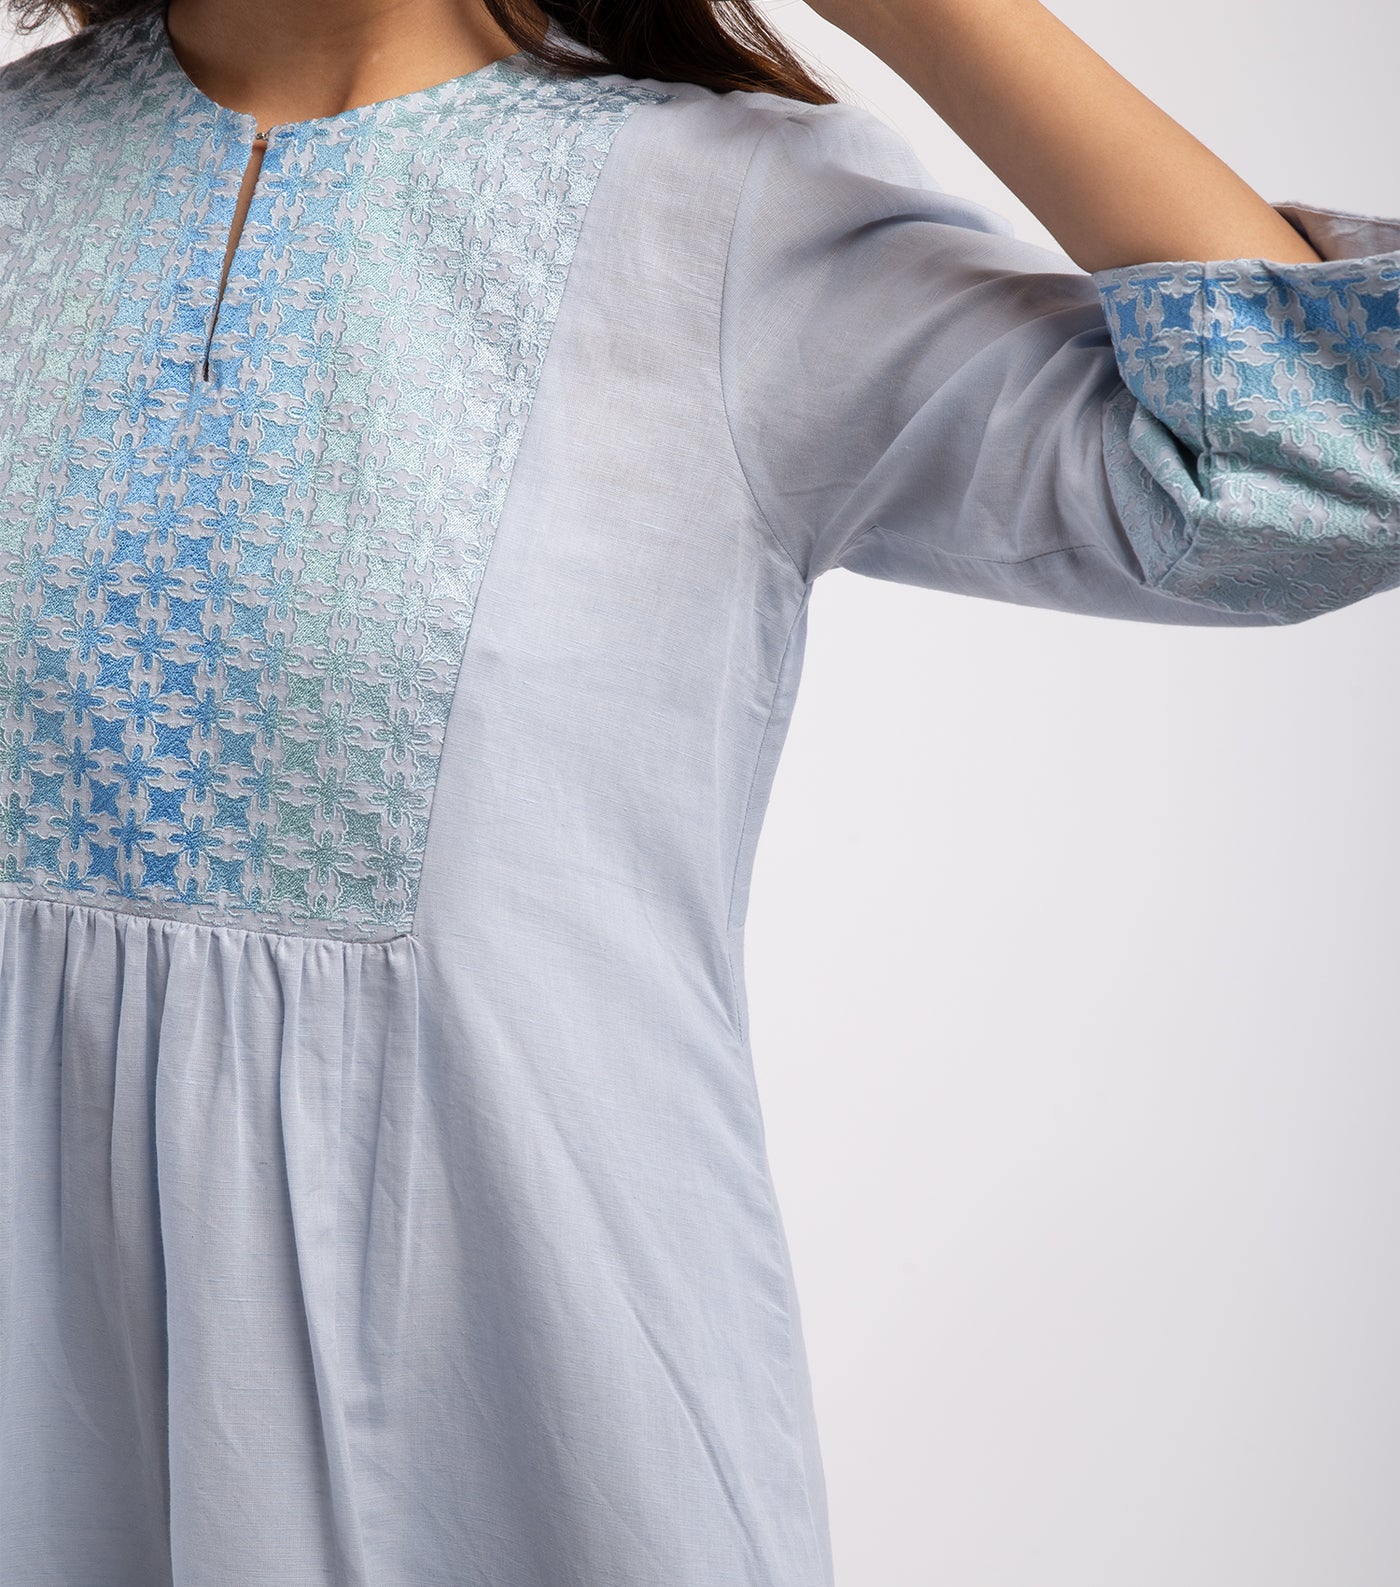 Blue embroidered Cotton linen Dress